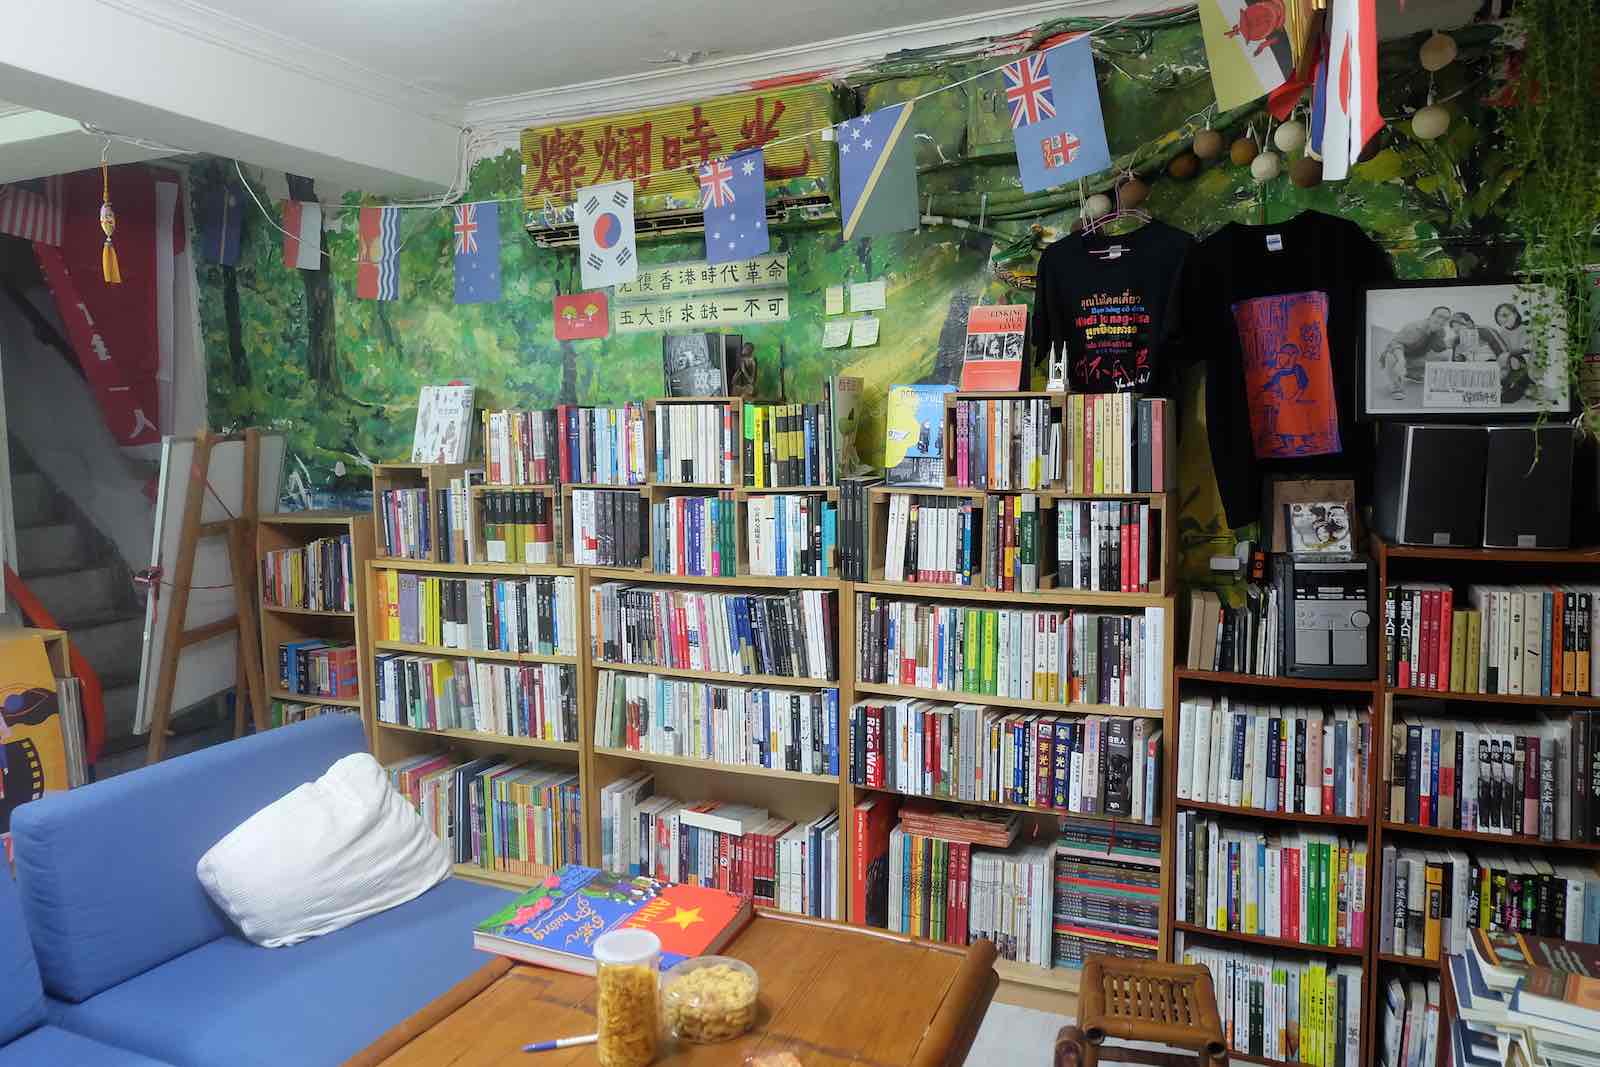 Inside the Brilliant Time bookshop (Photo: Randy Mulyanto)